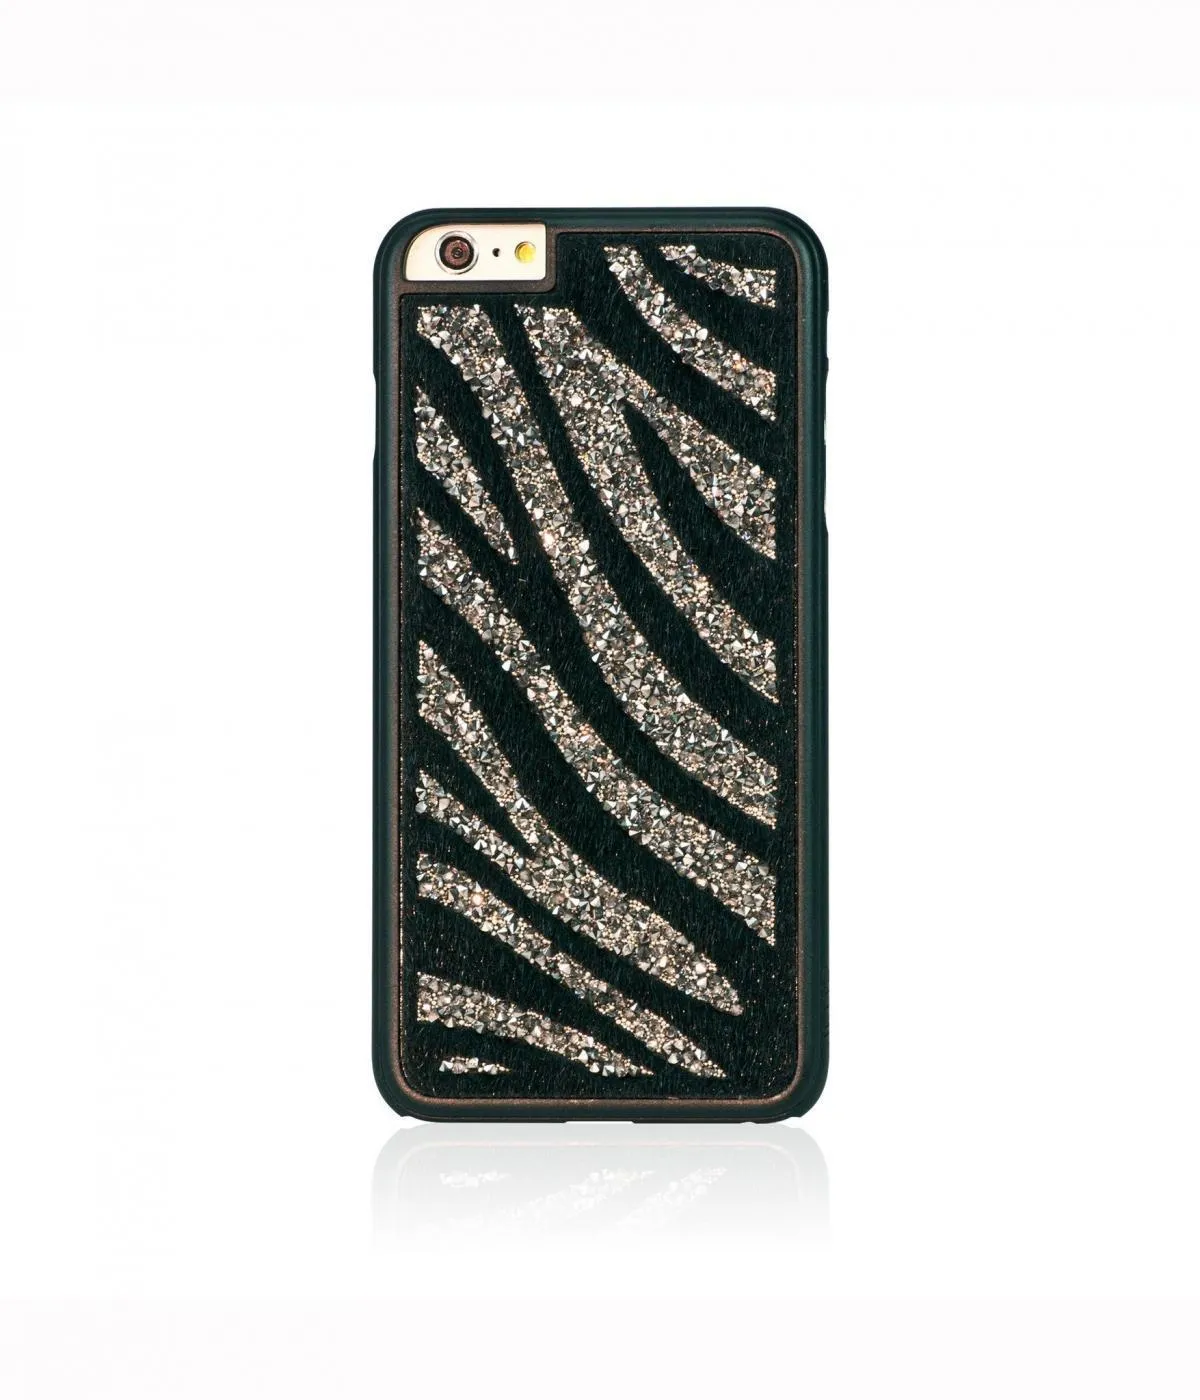 фото Чехол-накладка Bling My Thing Glam для Apple iPhone 6 Plus/6S Plus Glam Zebra (Black Diamond)